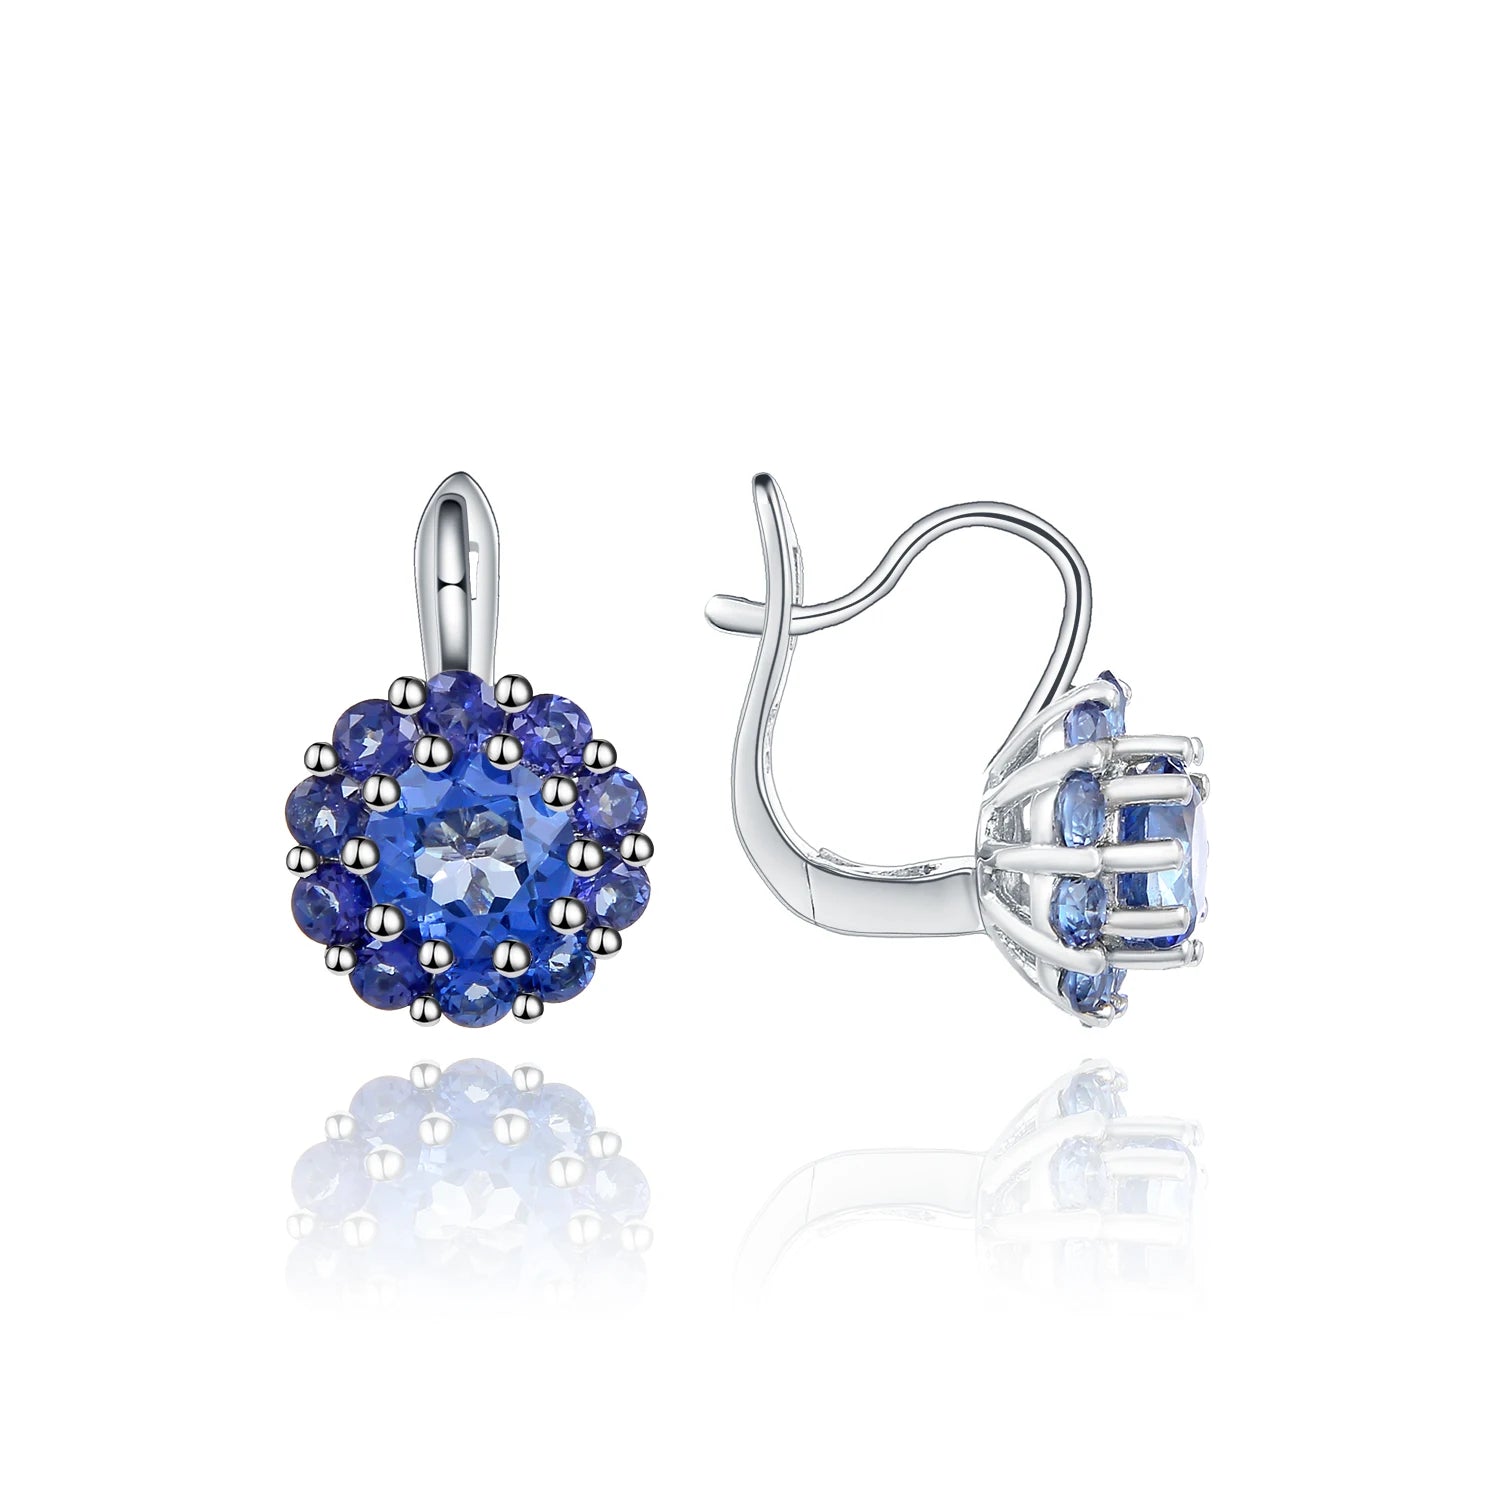 GEM'S BALLET Quartz Jewelry Gemstone Clip Earrings Iolite Blue Mystic Quartz Statement Earrings in Sterling Silver Gift For Her Mystic Quartz 925 Sterling Silver